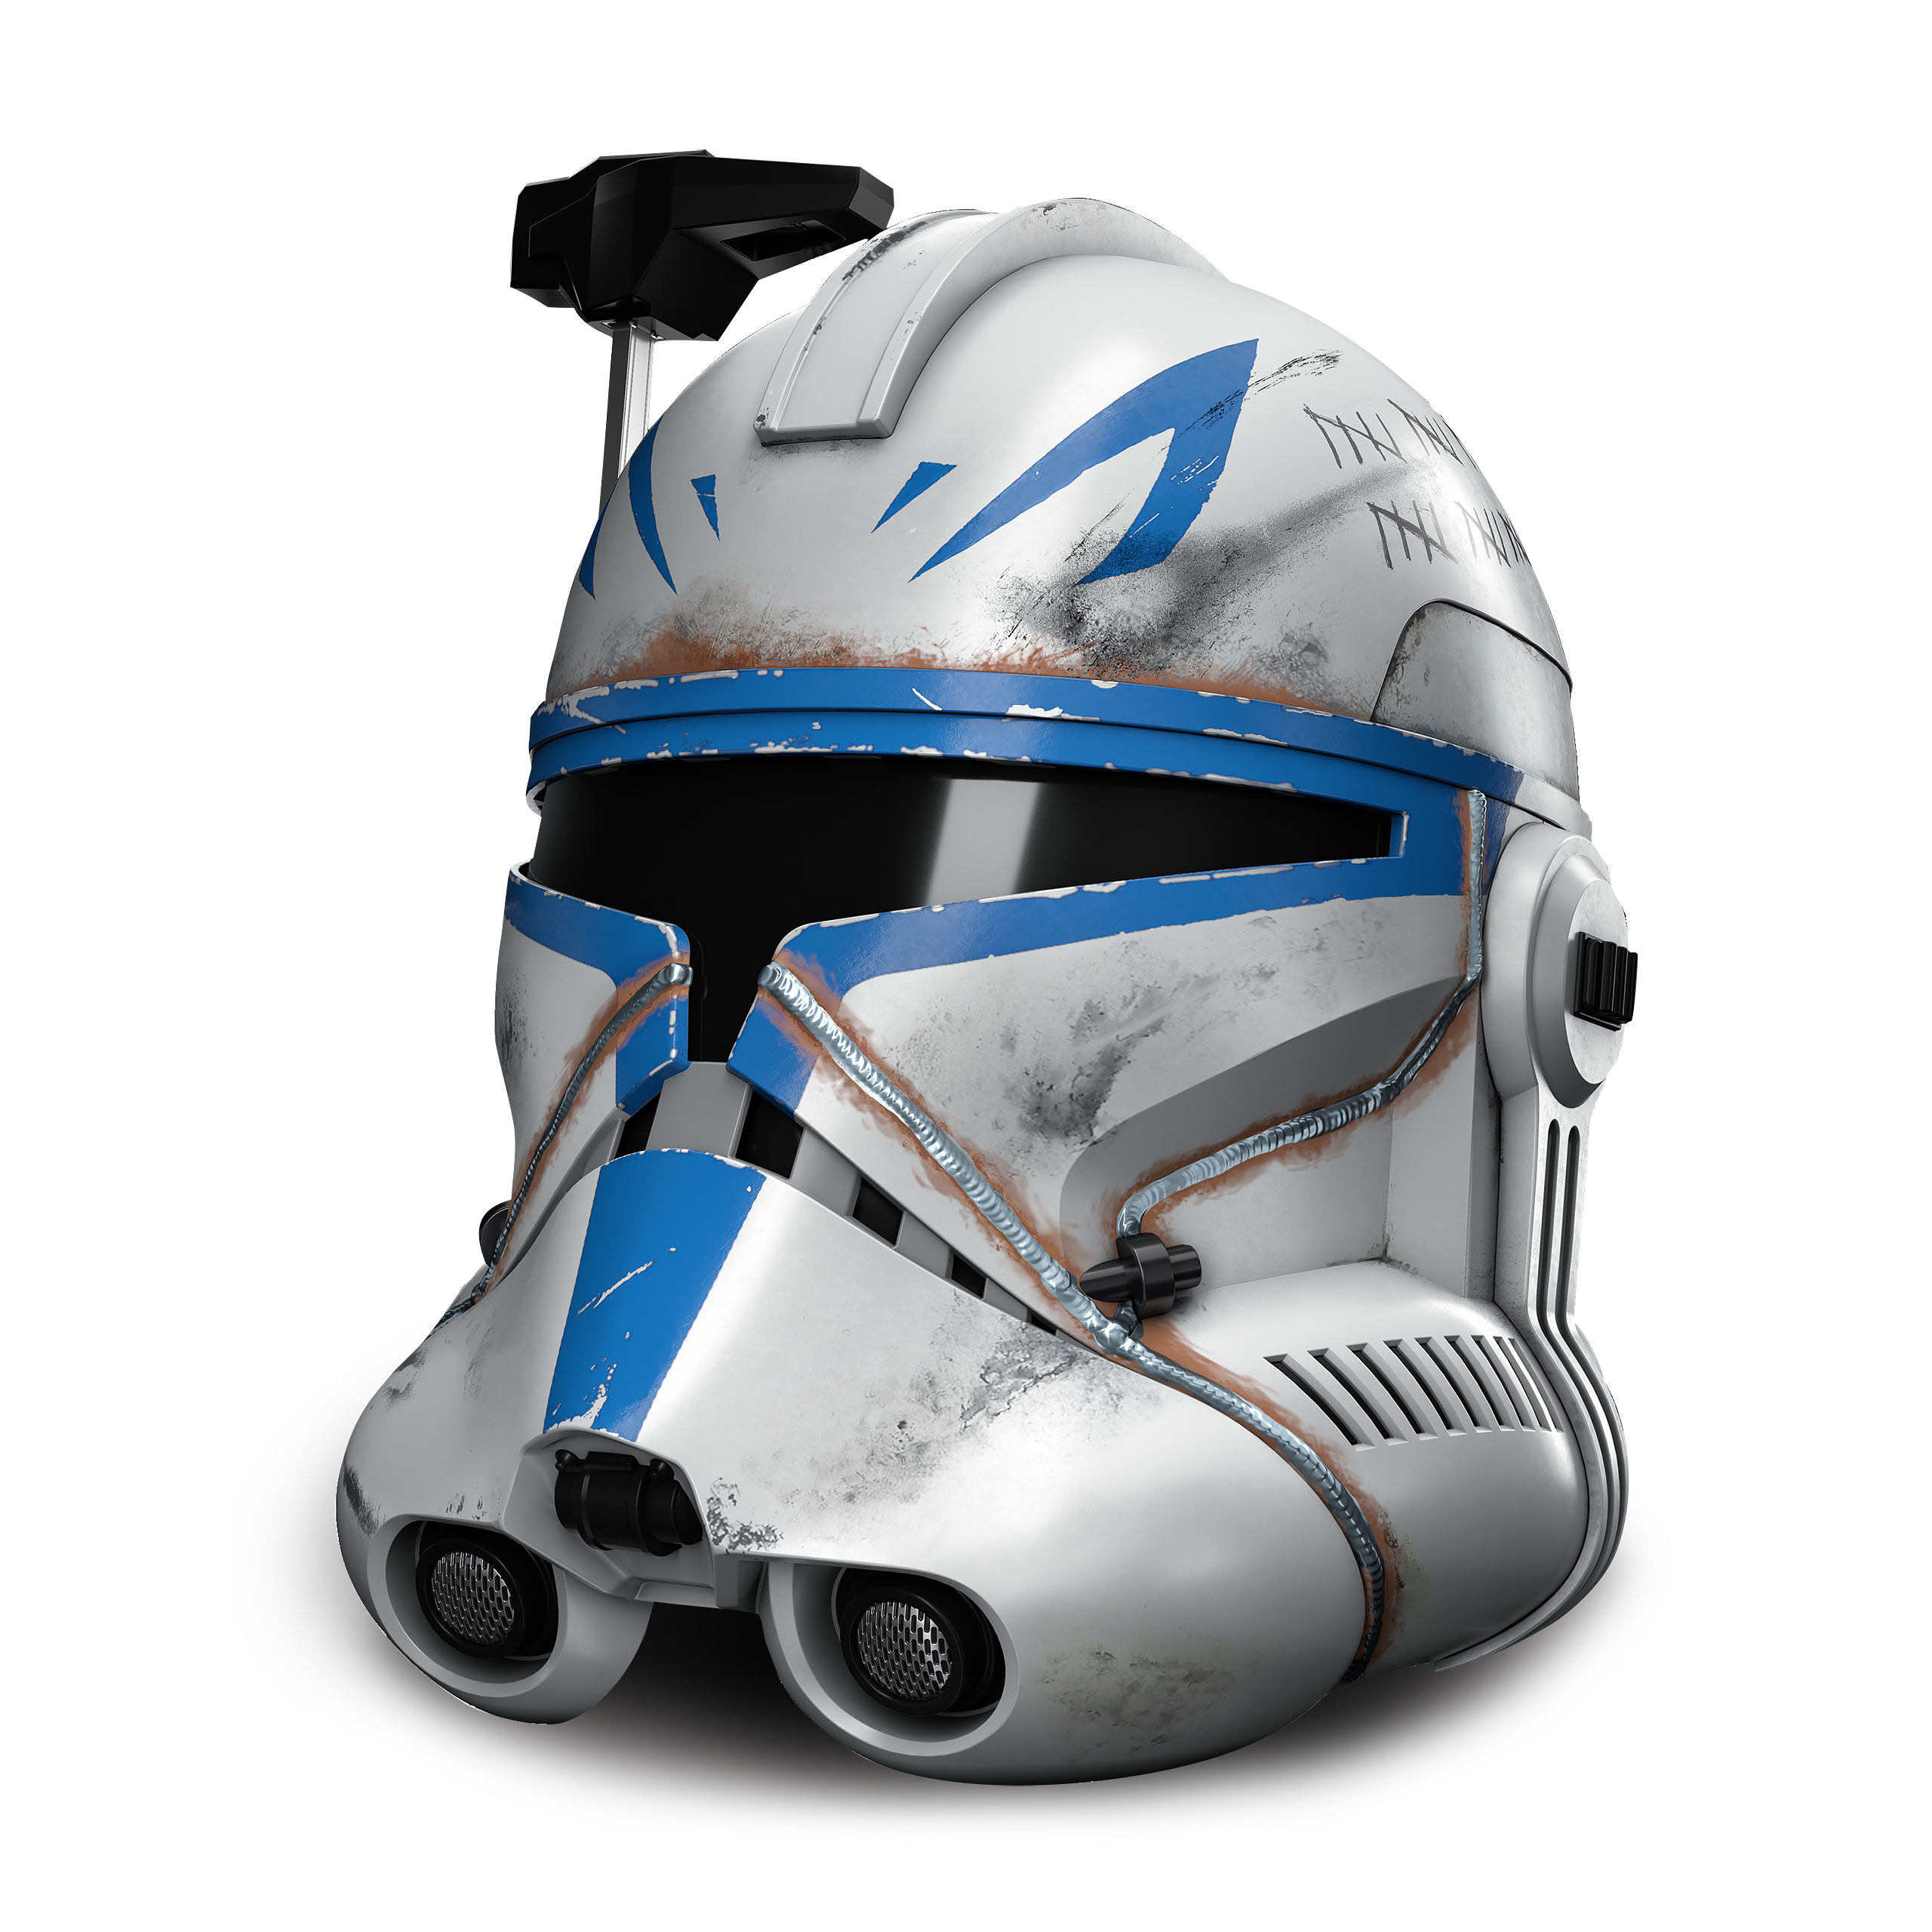 Star Wars Ahsoka - Captain Rex Black Series Helm Replica